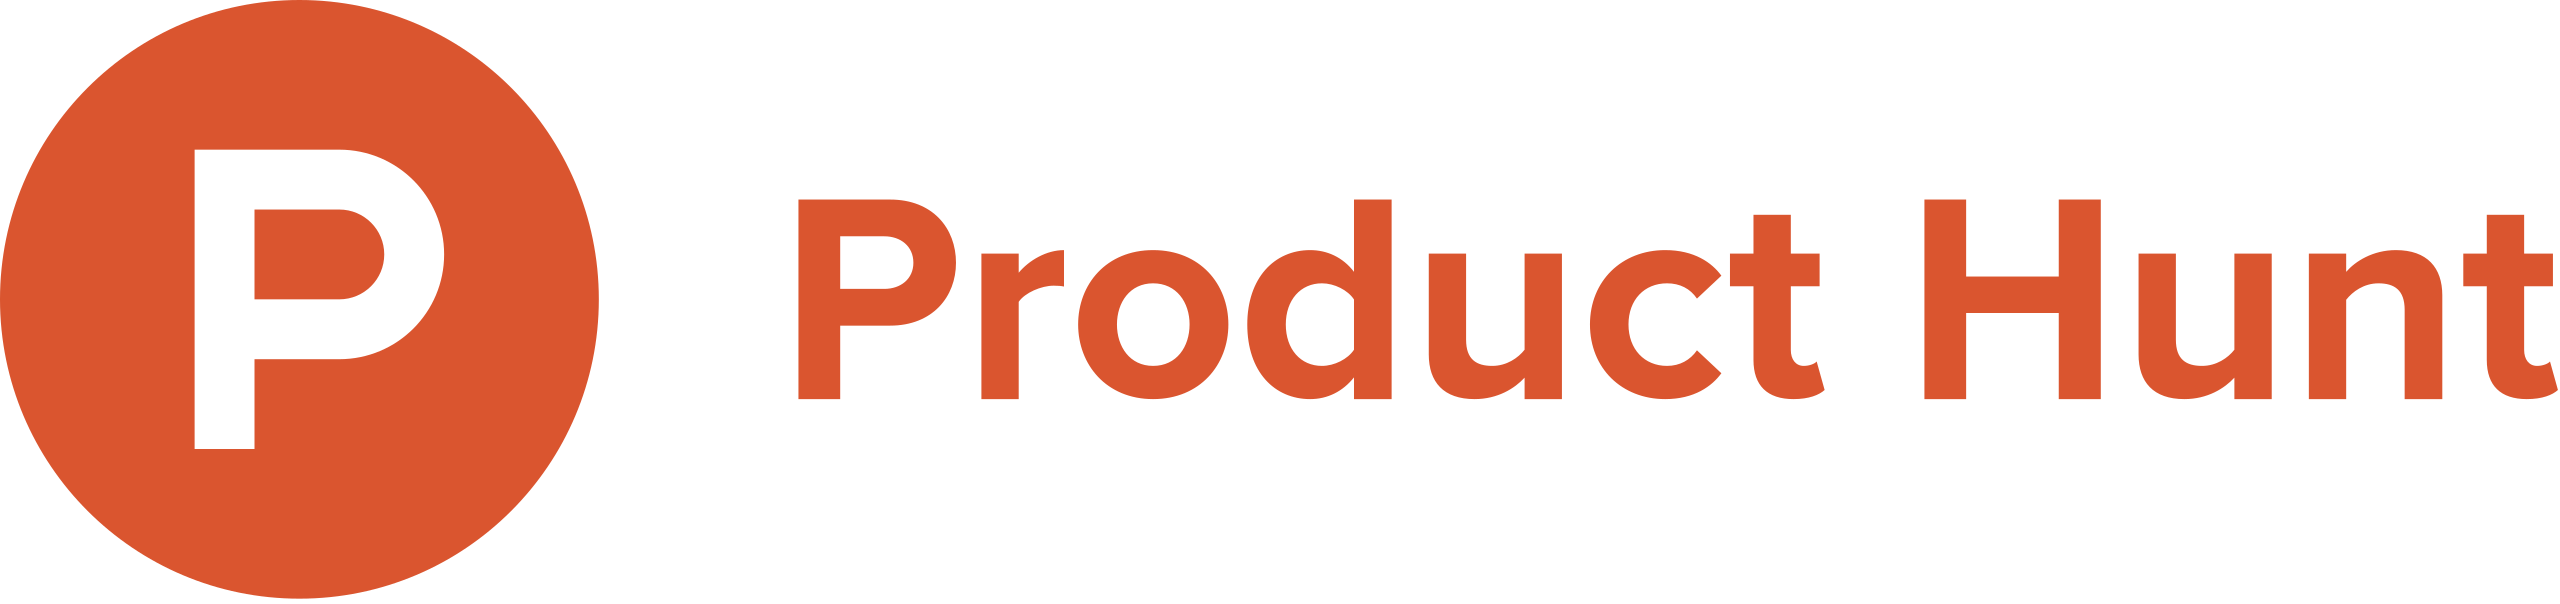 Producthunt.com